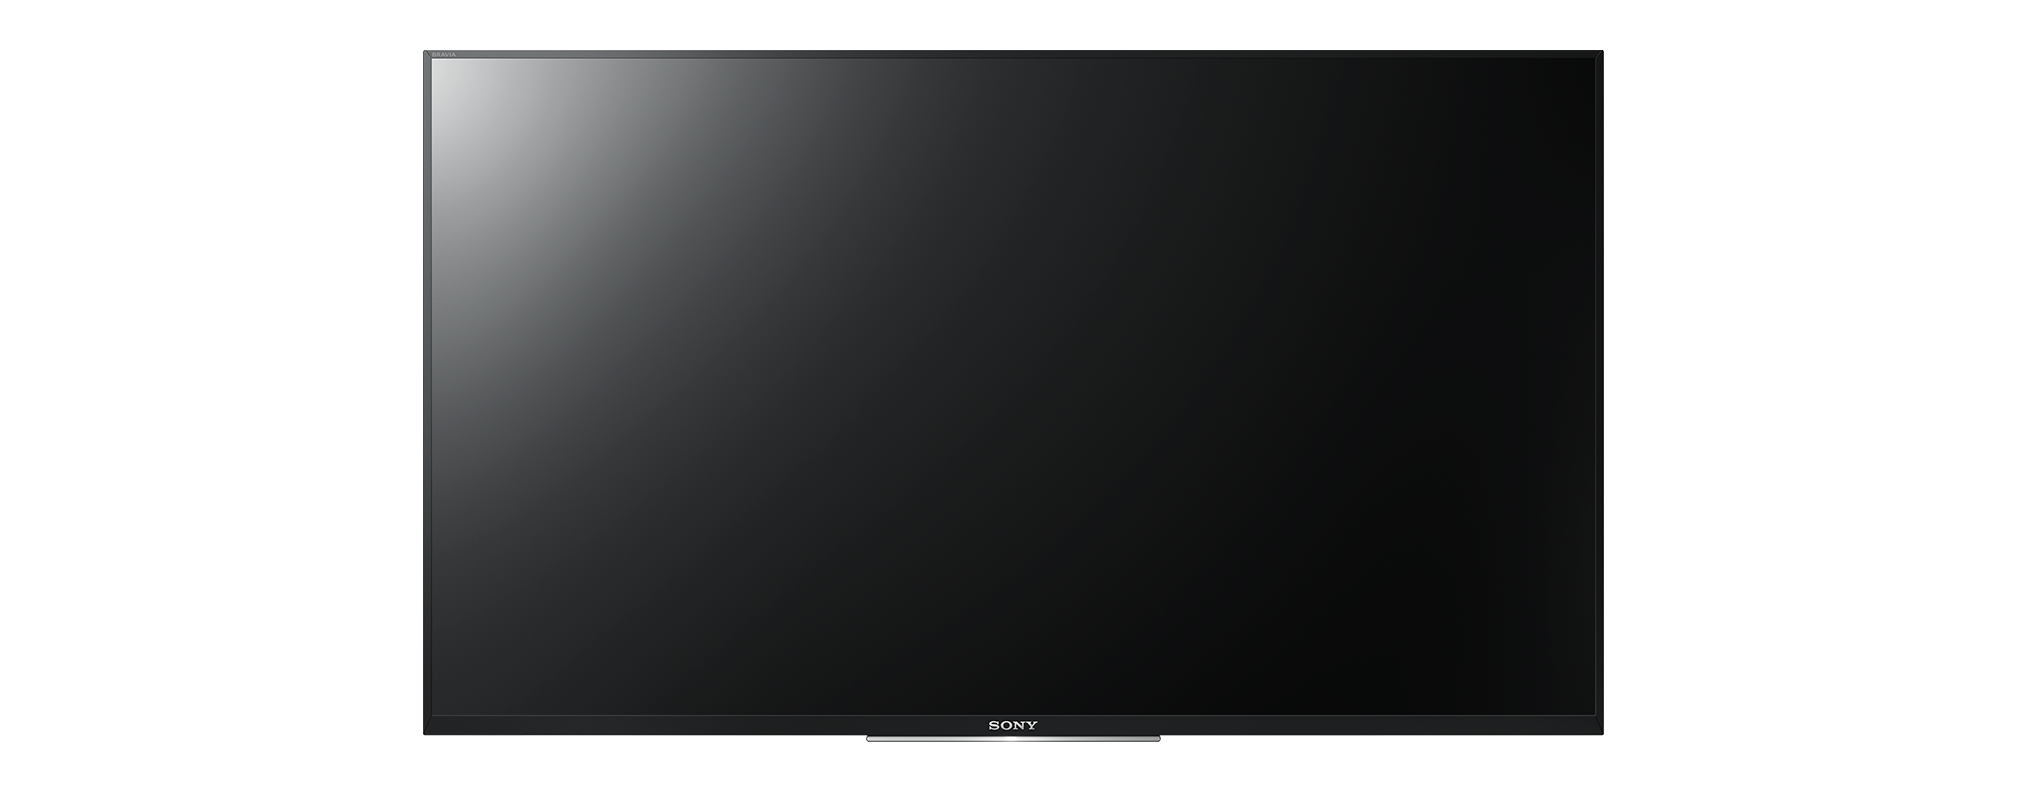 LED TV PNG Image File